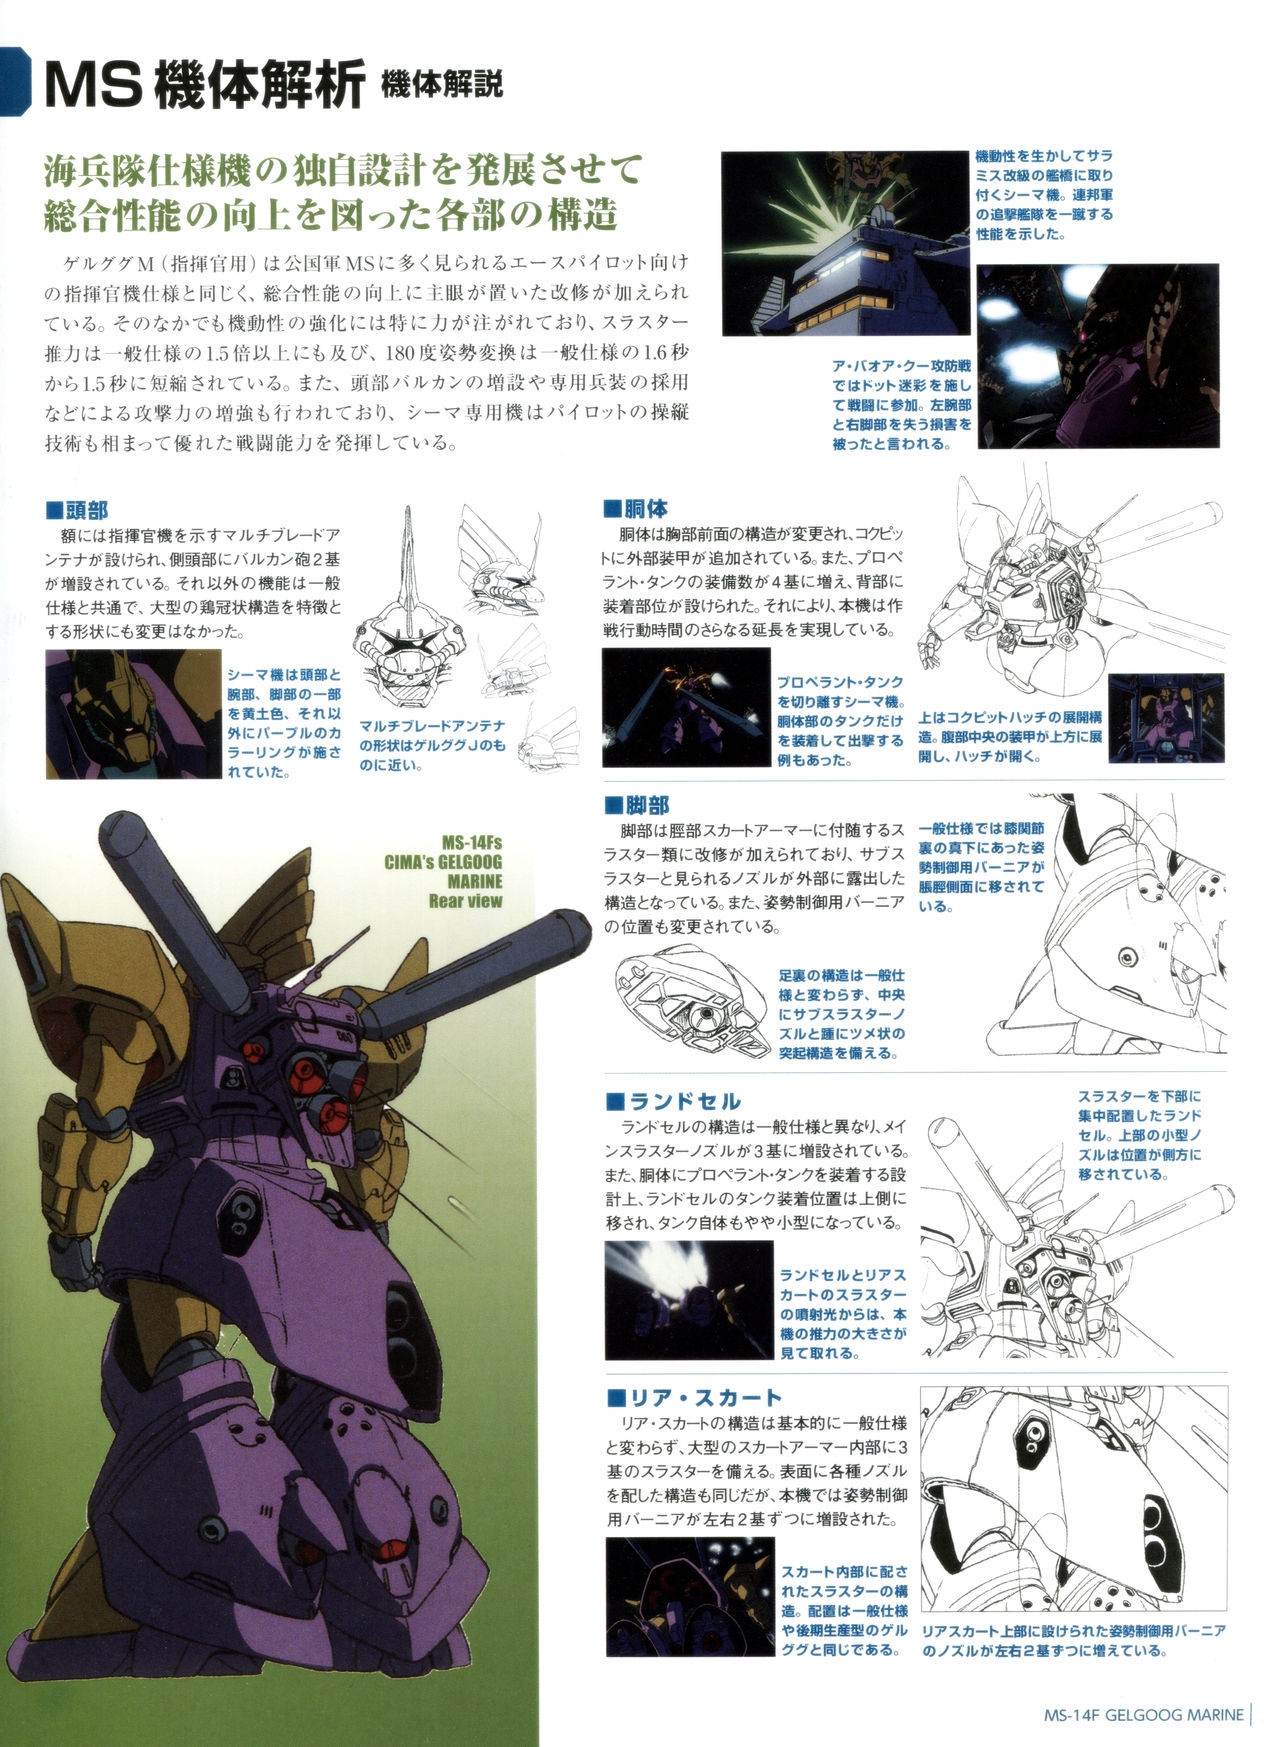 Gundam Mobile Suit Bible 19 10